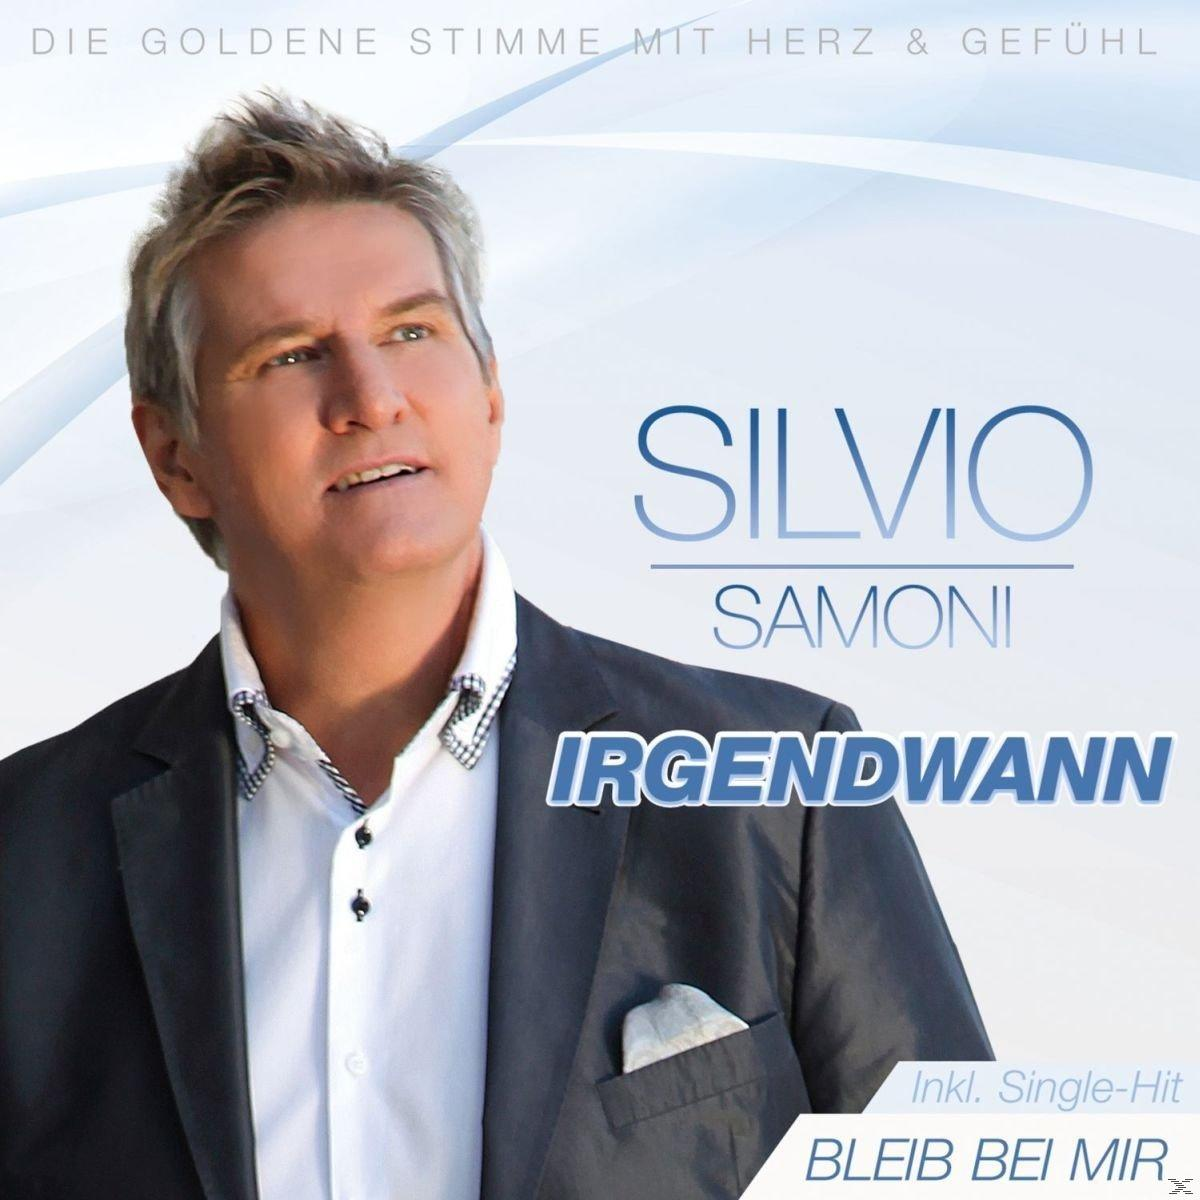 Silvio - - Irgendwann (CD) Samoni